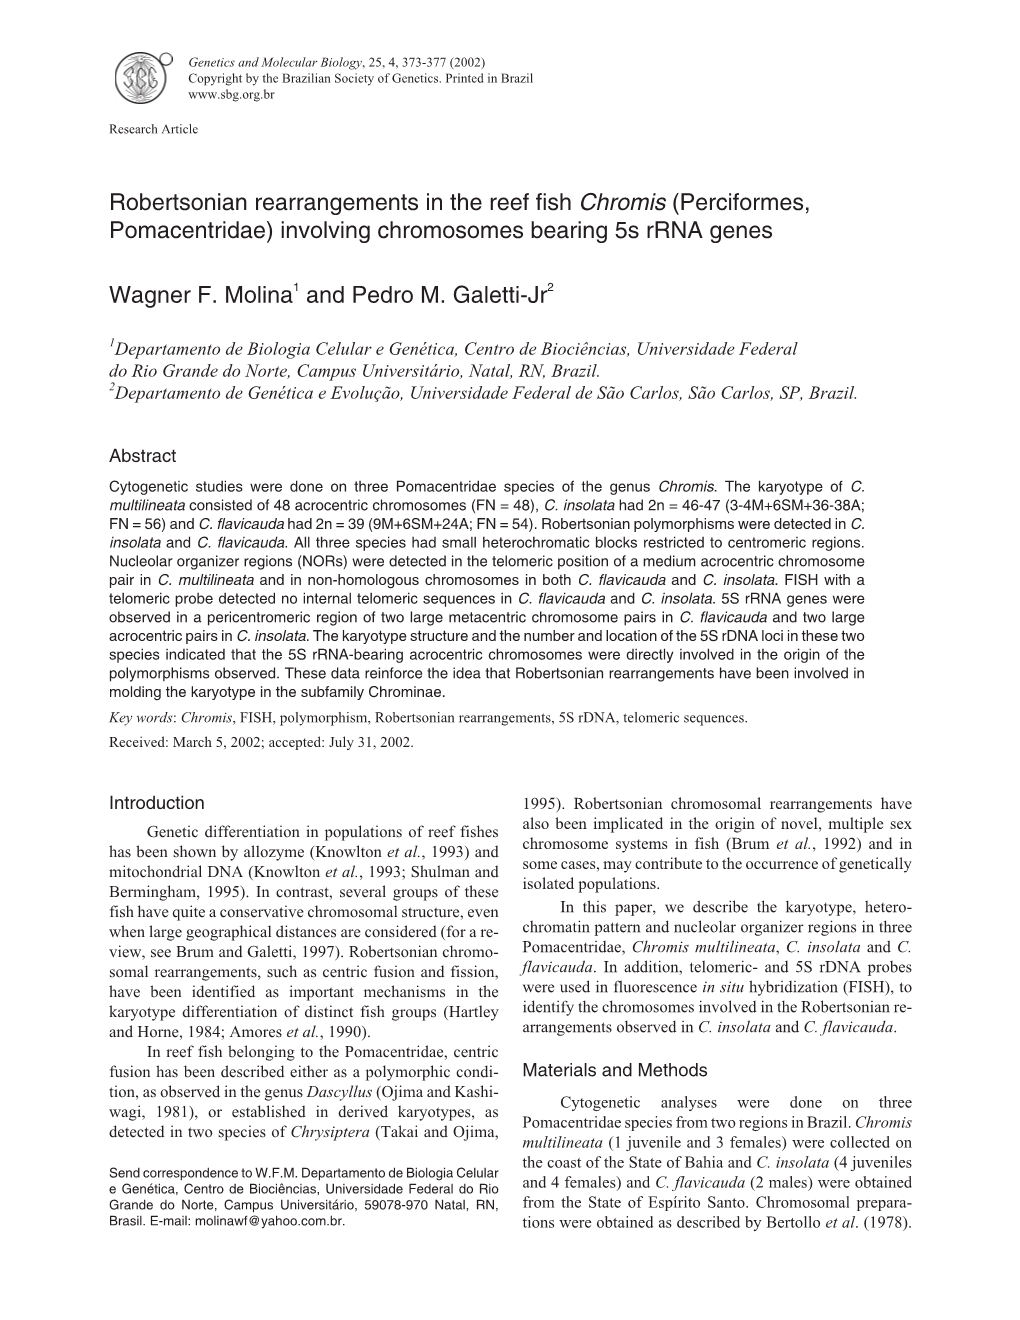 Robertsonian Rearrangements in the Reef Fish Chromis (Perciformes, Pomacentridae) Involving Chromosomes Bearing 5S Rrna Genes